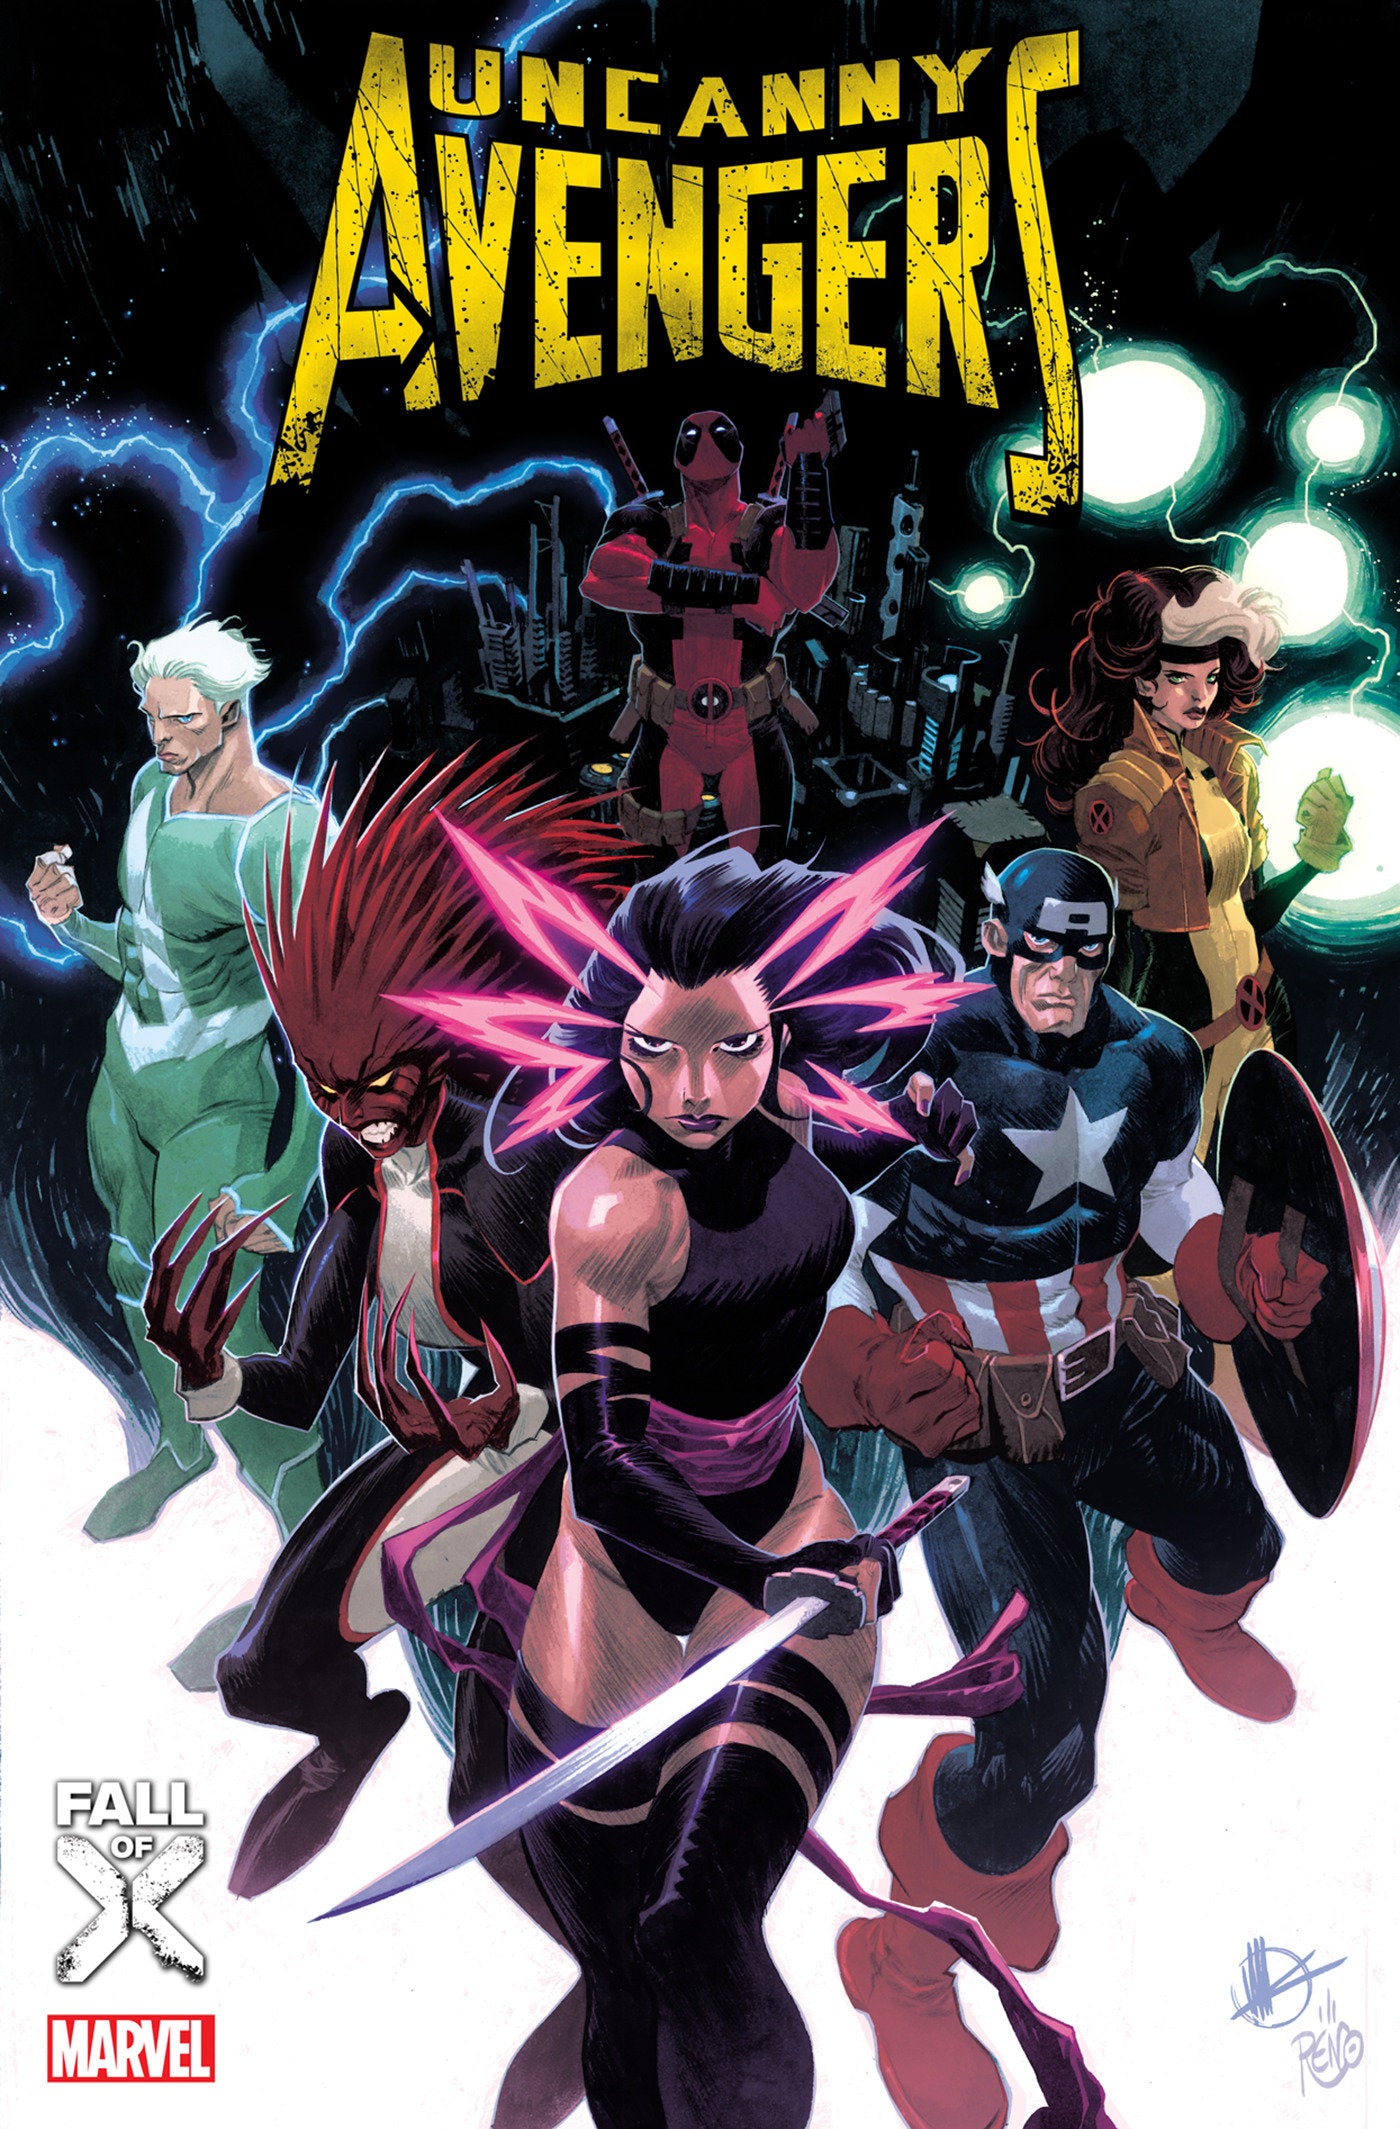 Uncanny Avengers #4 Matteo Scalera Variant [Fall]